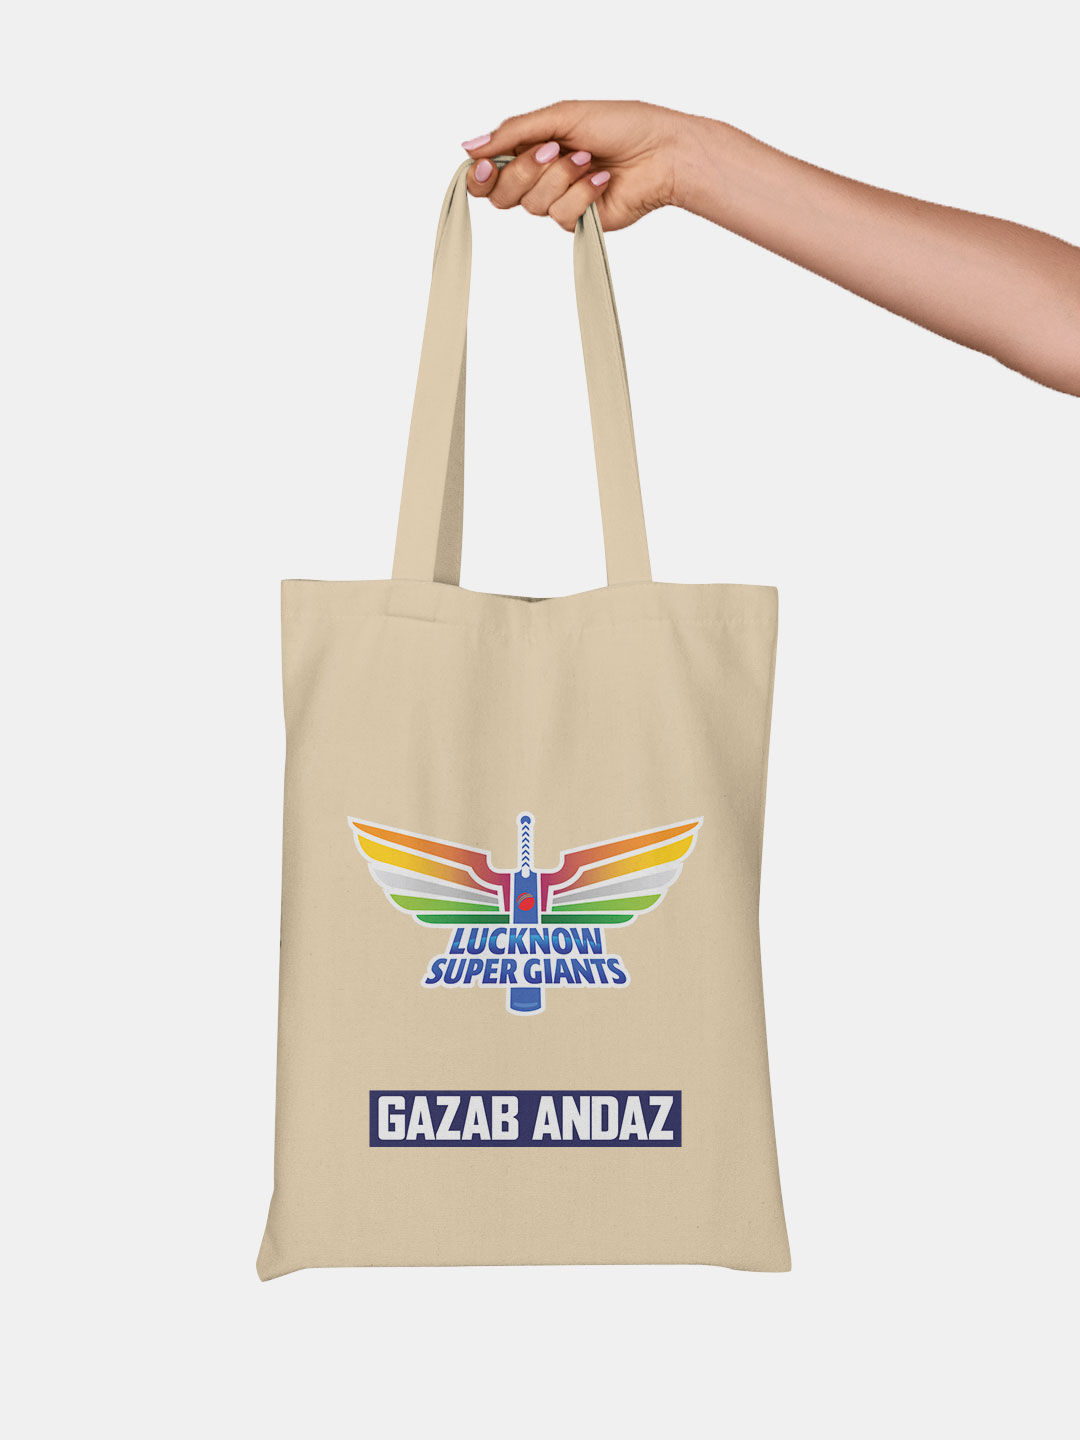 Buy LSG Gazab Andaz - Tote Bags Tote Bags Online